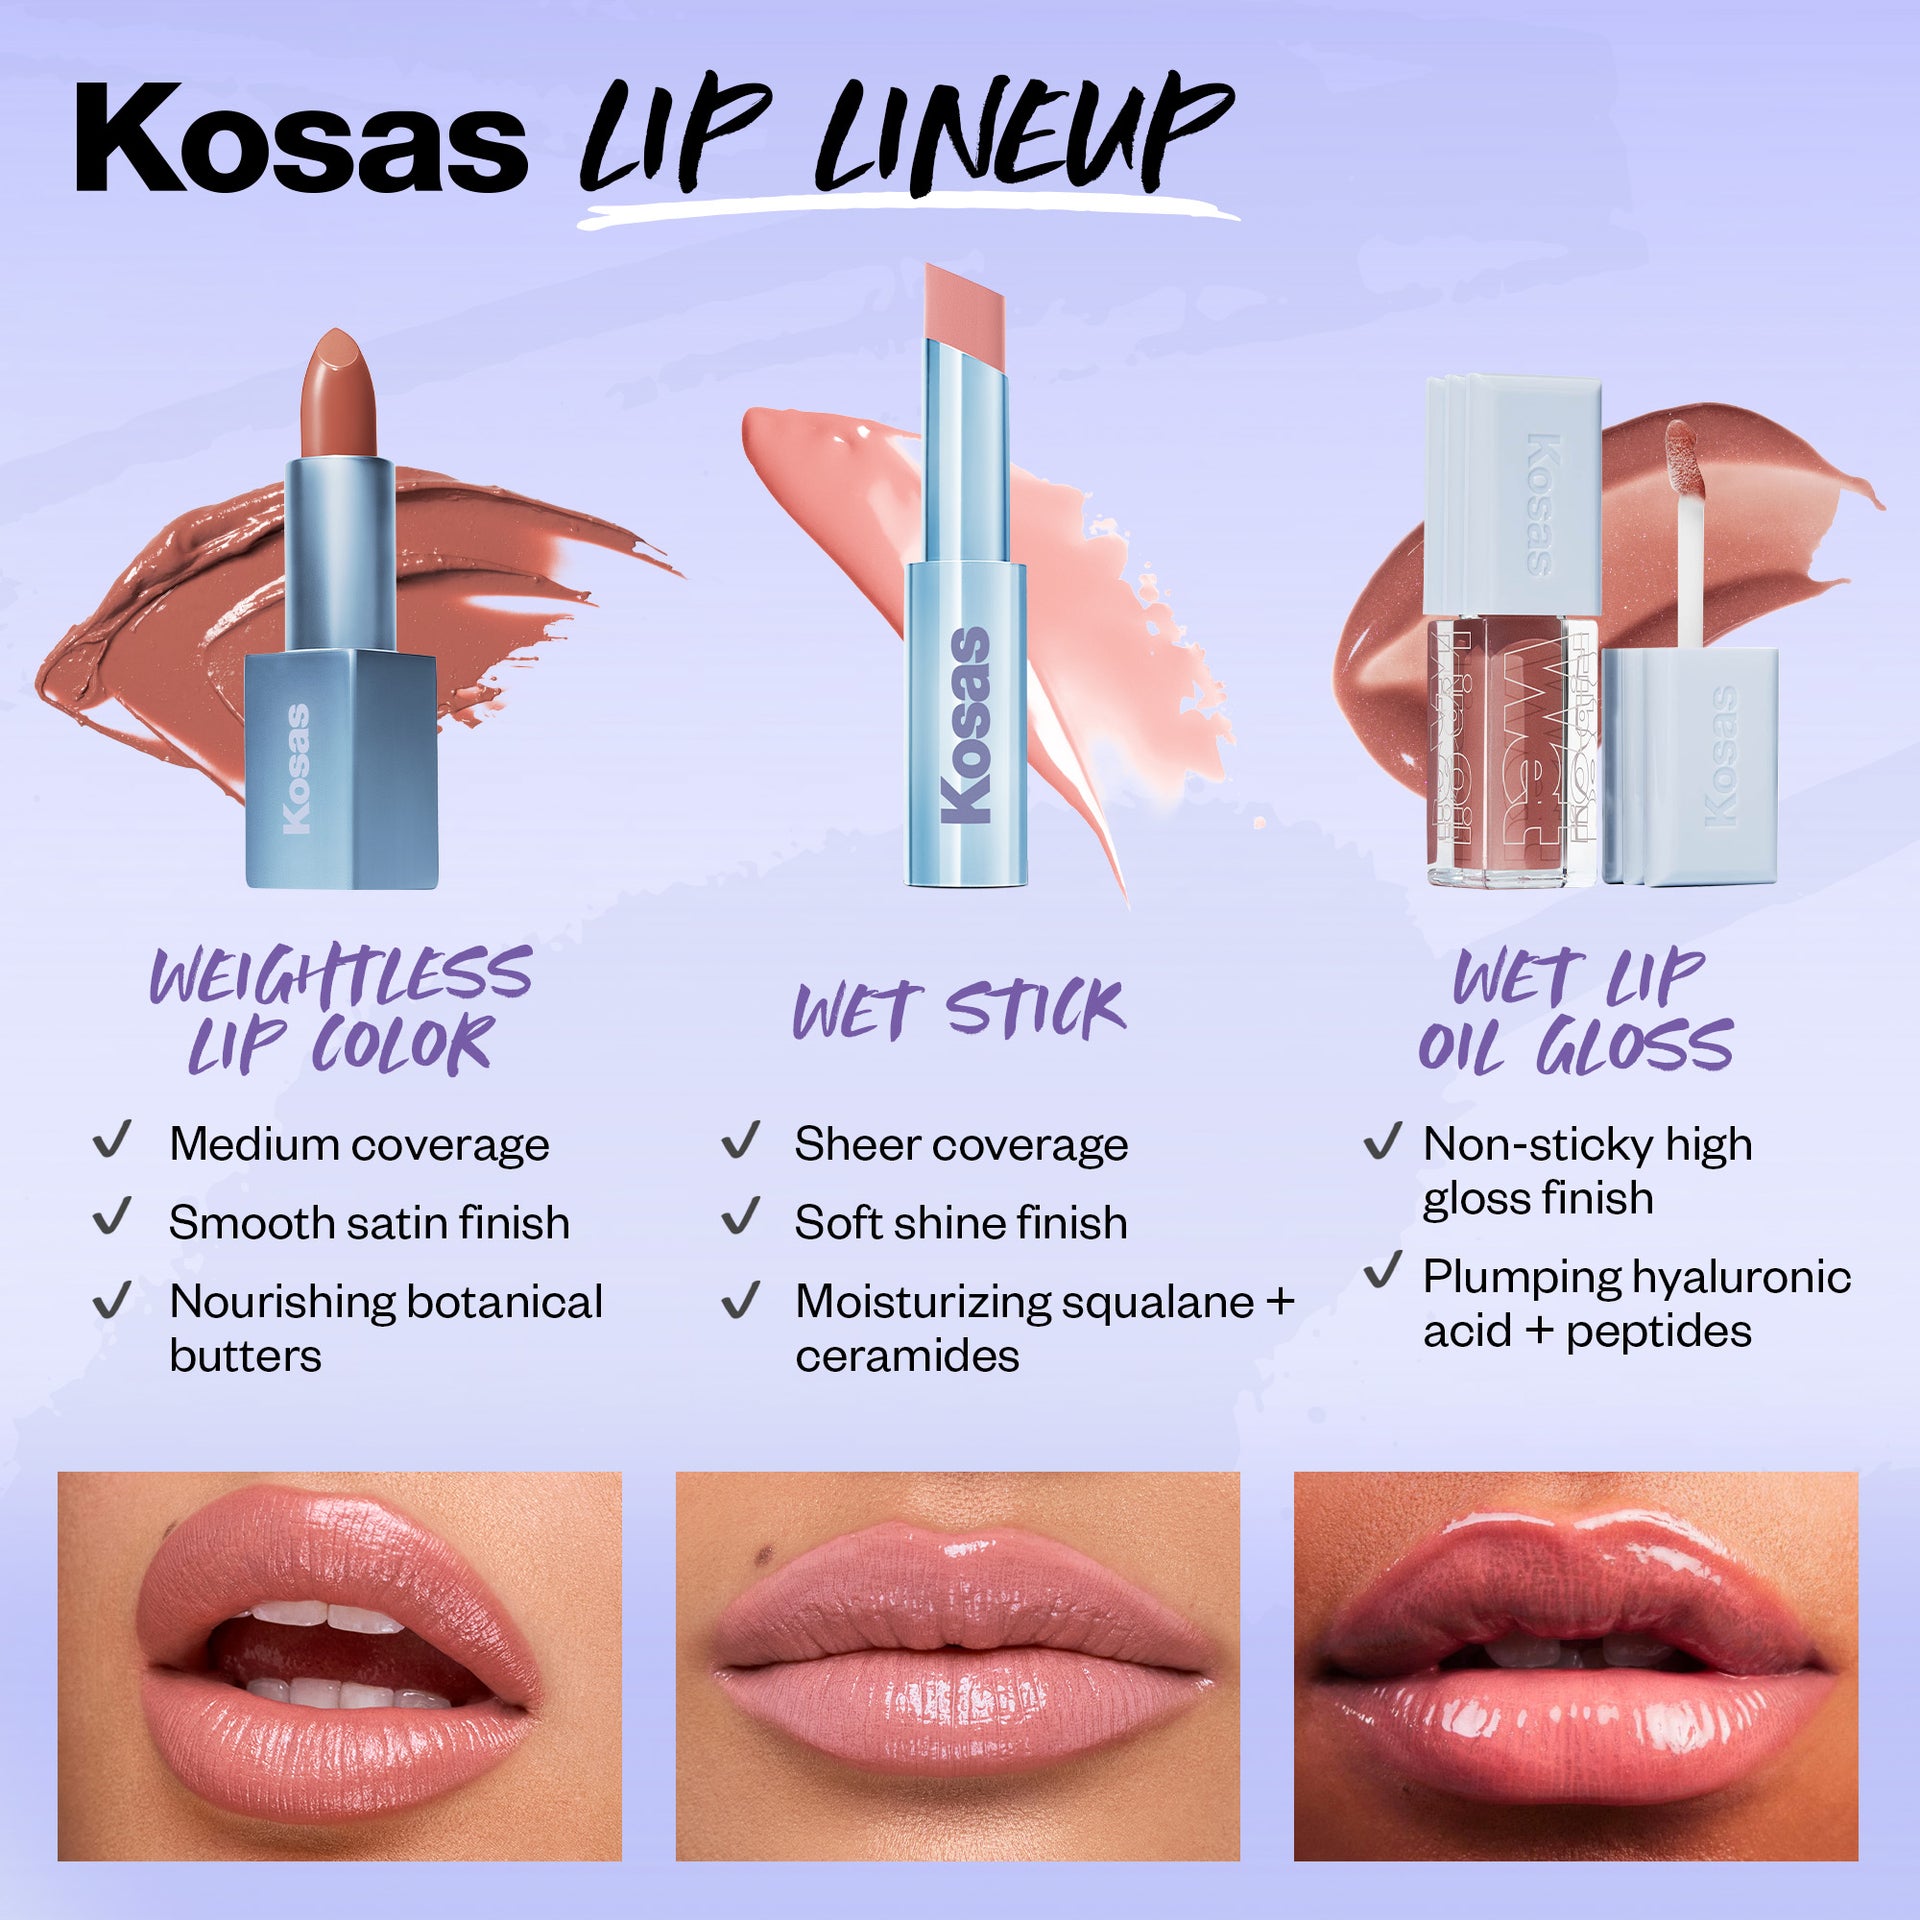 Kosas Lip Line Up